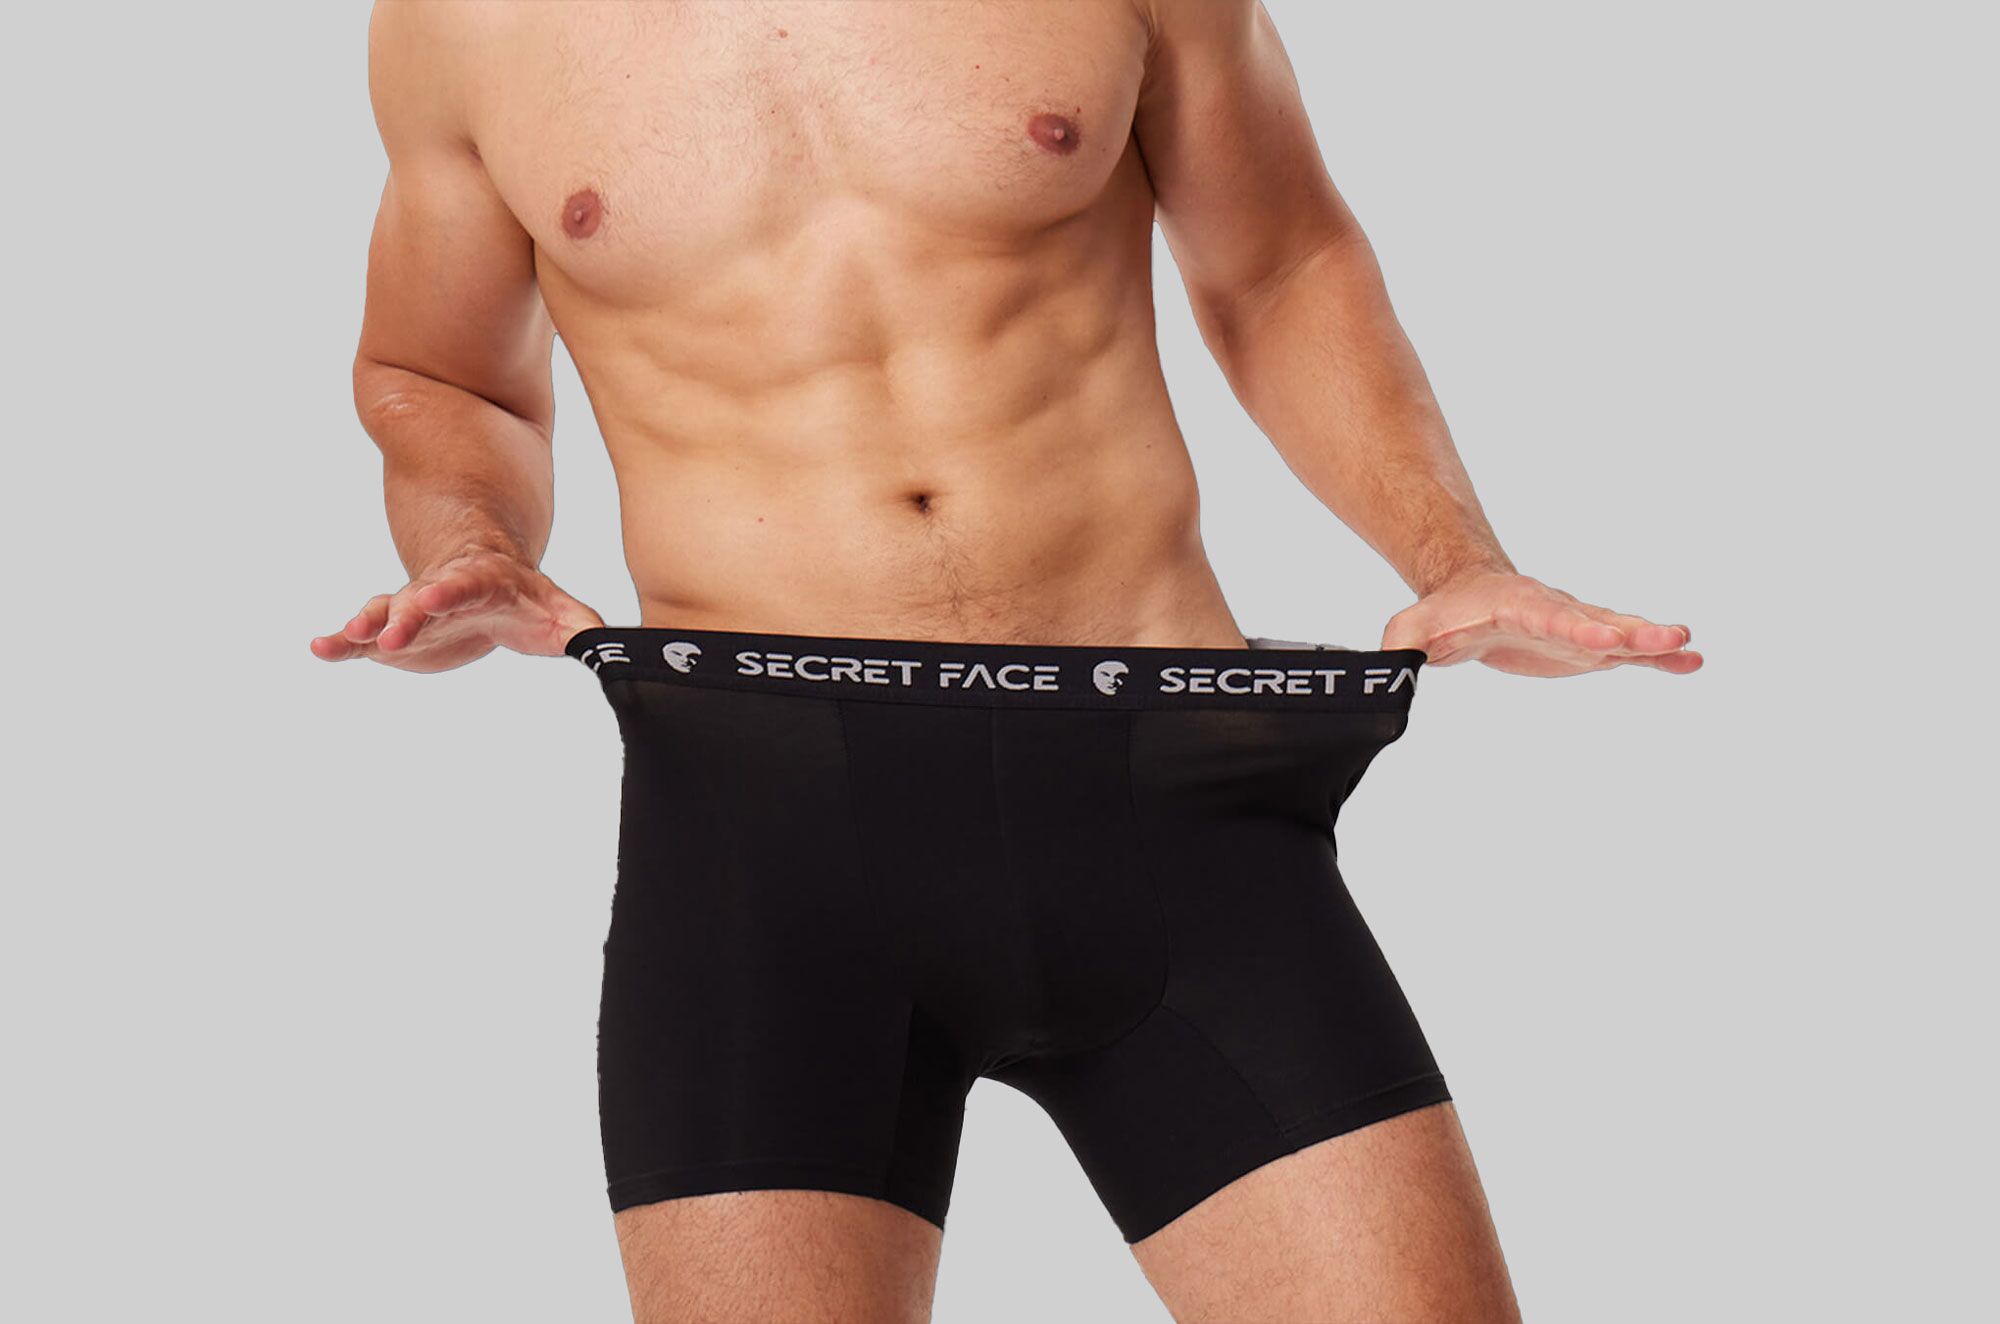 Secret Face Men's Underwear - Luxury & Comfort Direct from the Makers